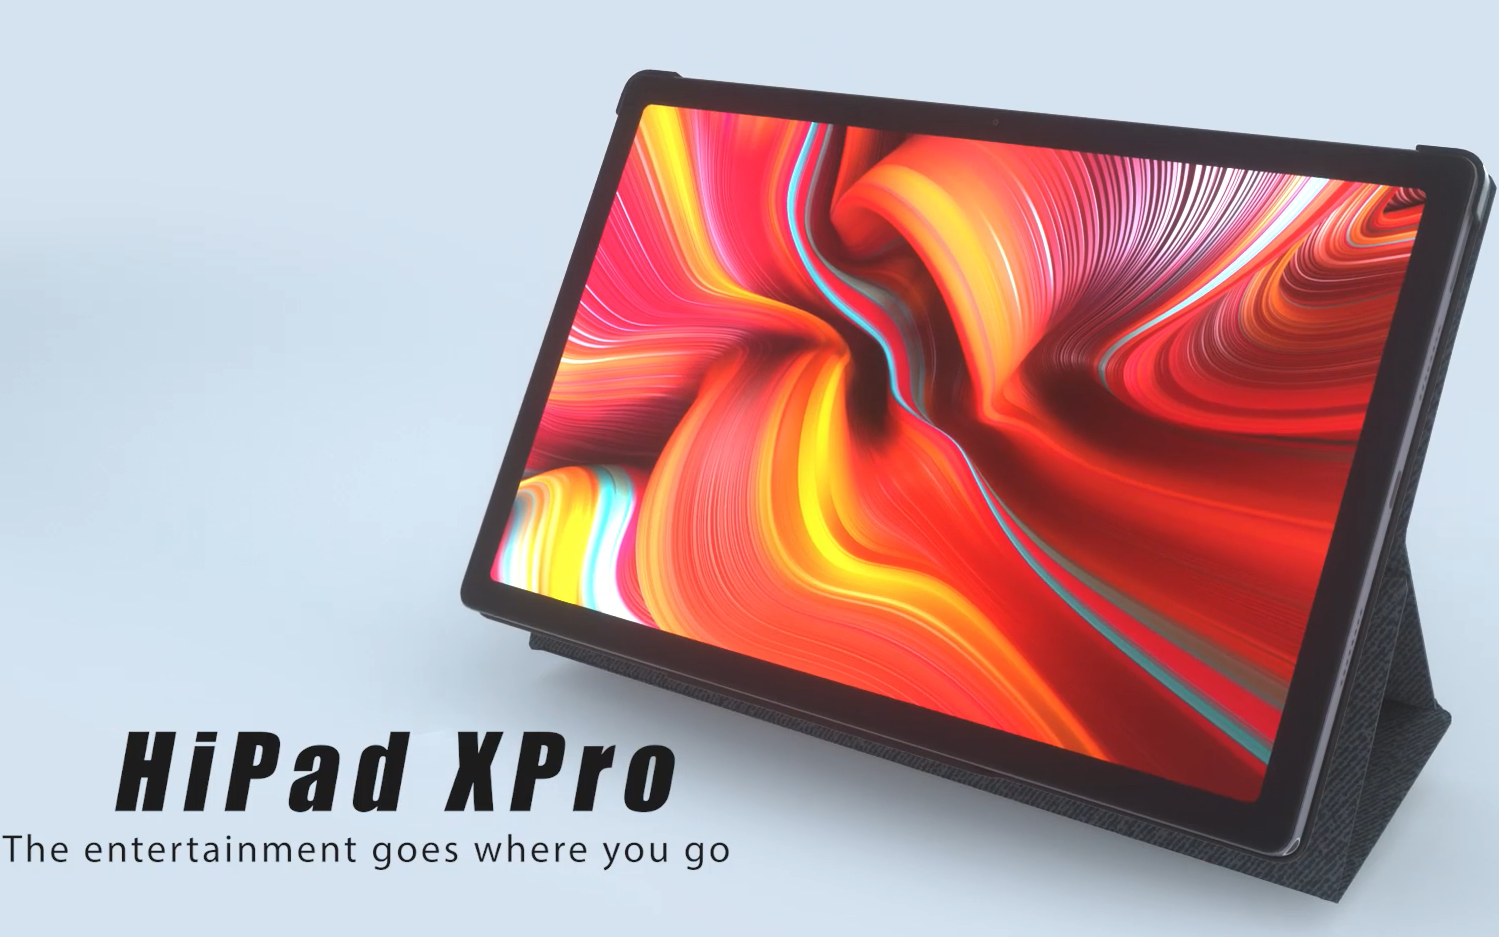 HiPad XPro Introduction